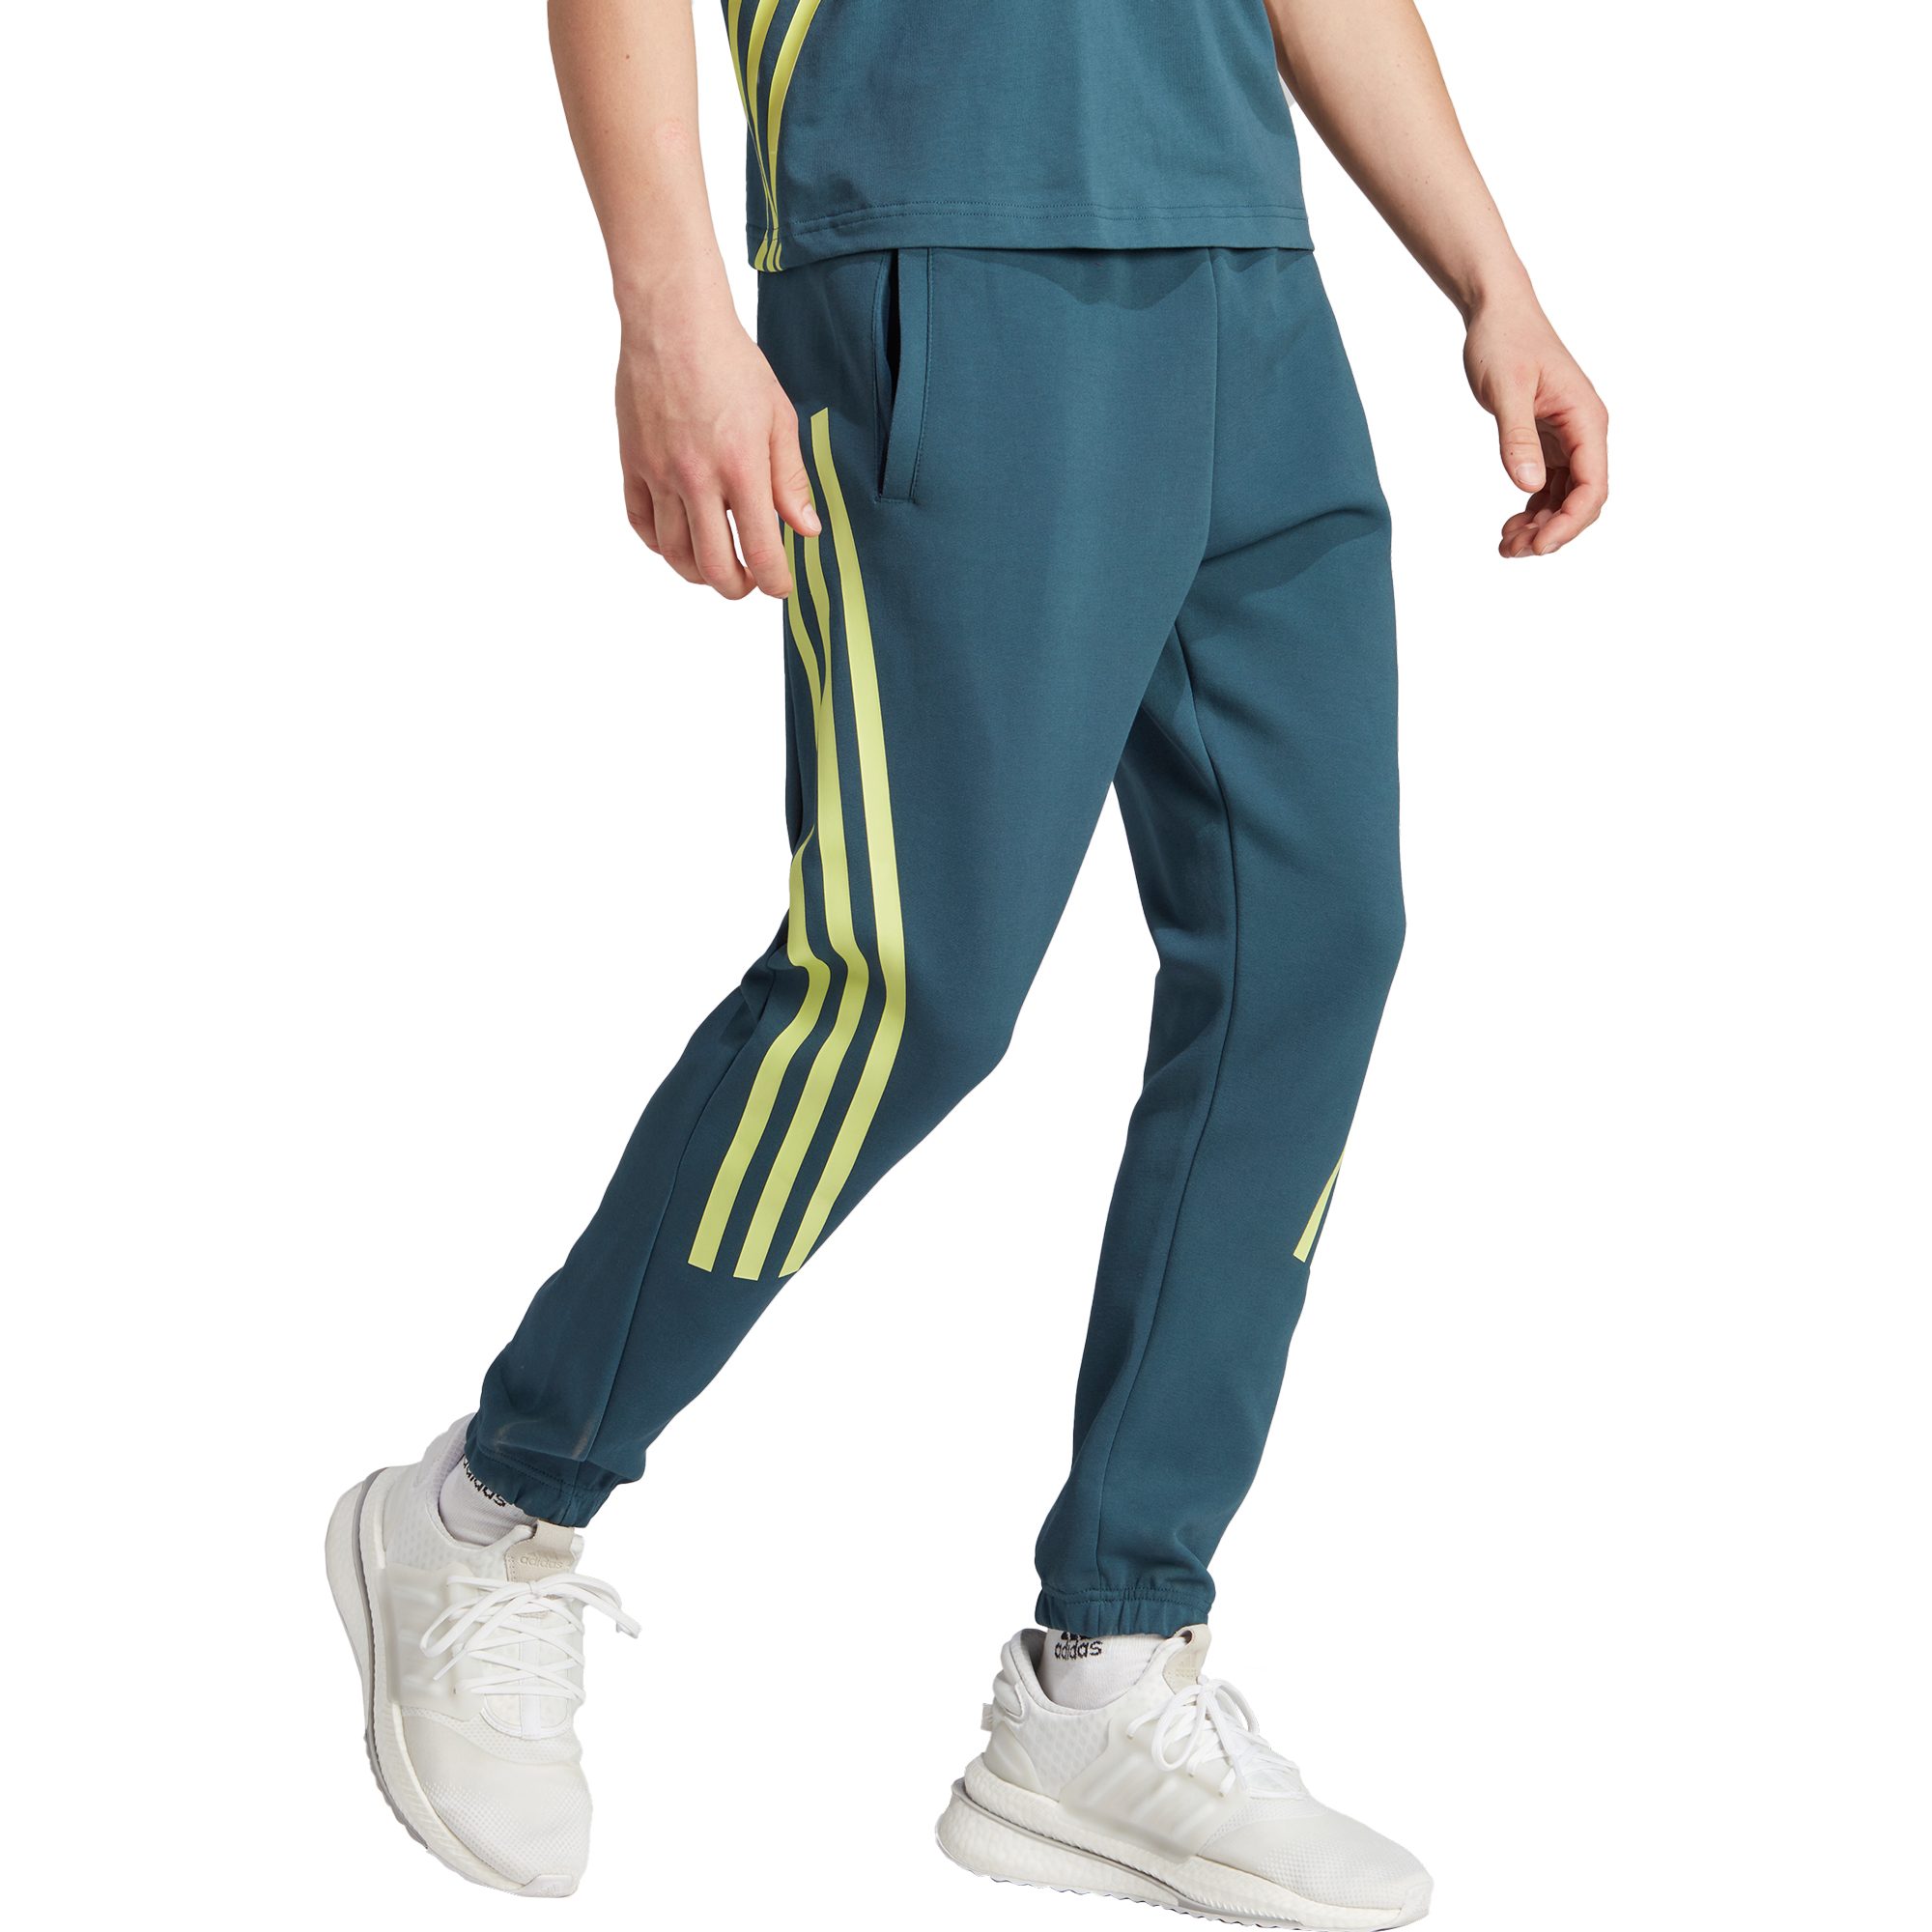 Adidas Sweatpants for Men